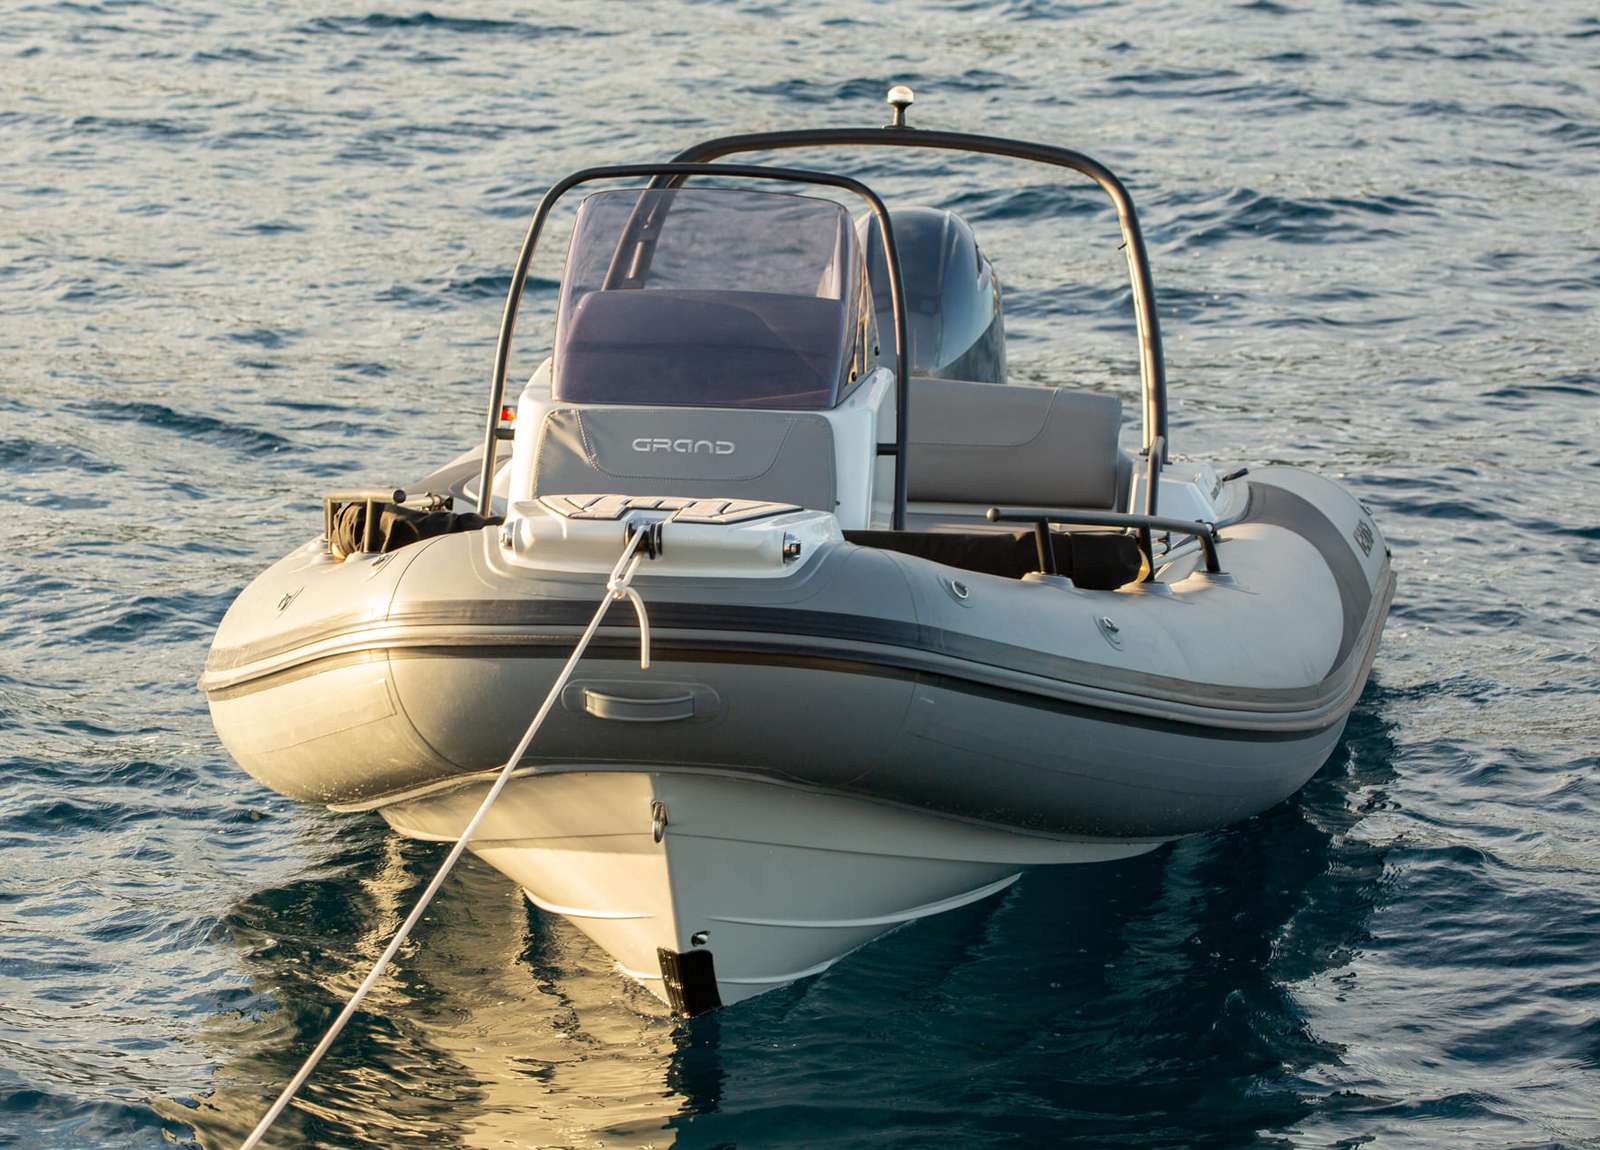 dinghy luxury catamaran sunreef 60 sunbreeze balearic islands